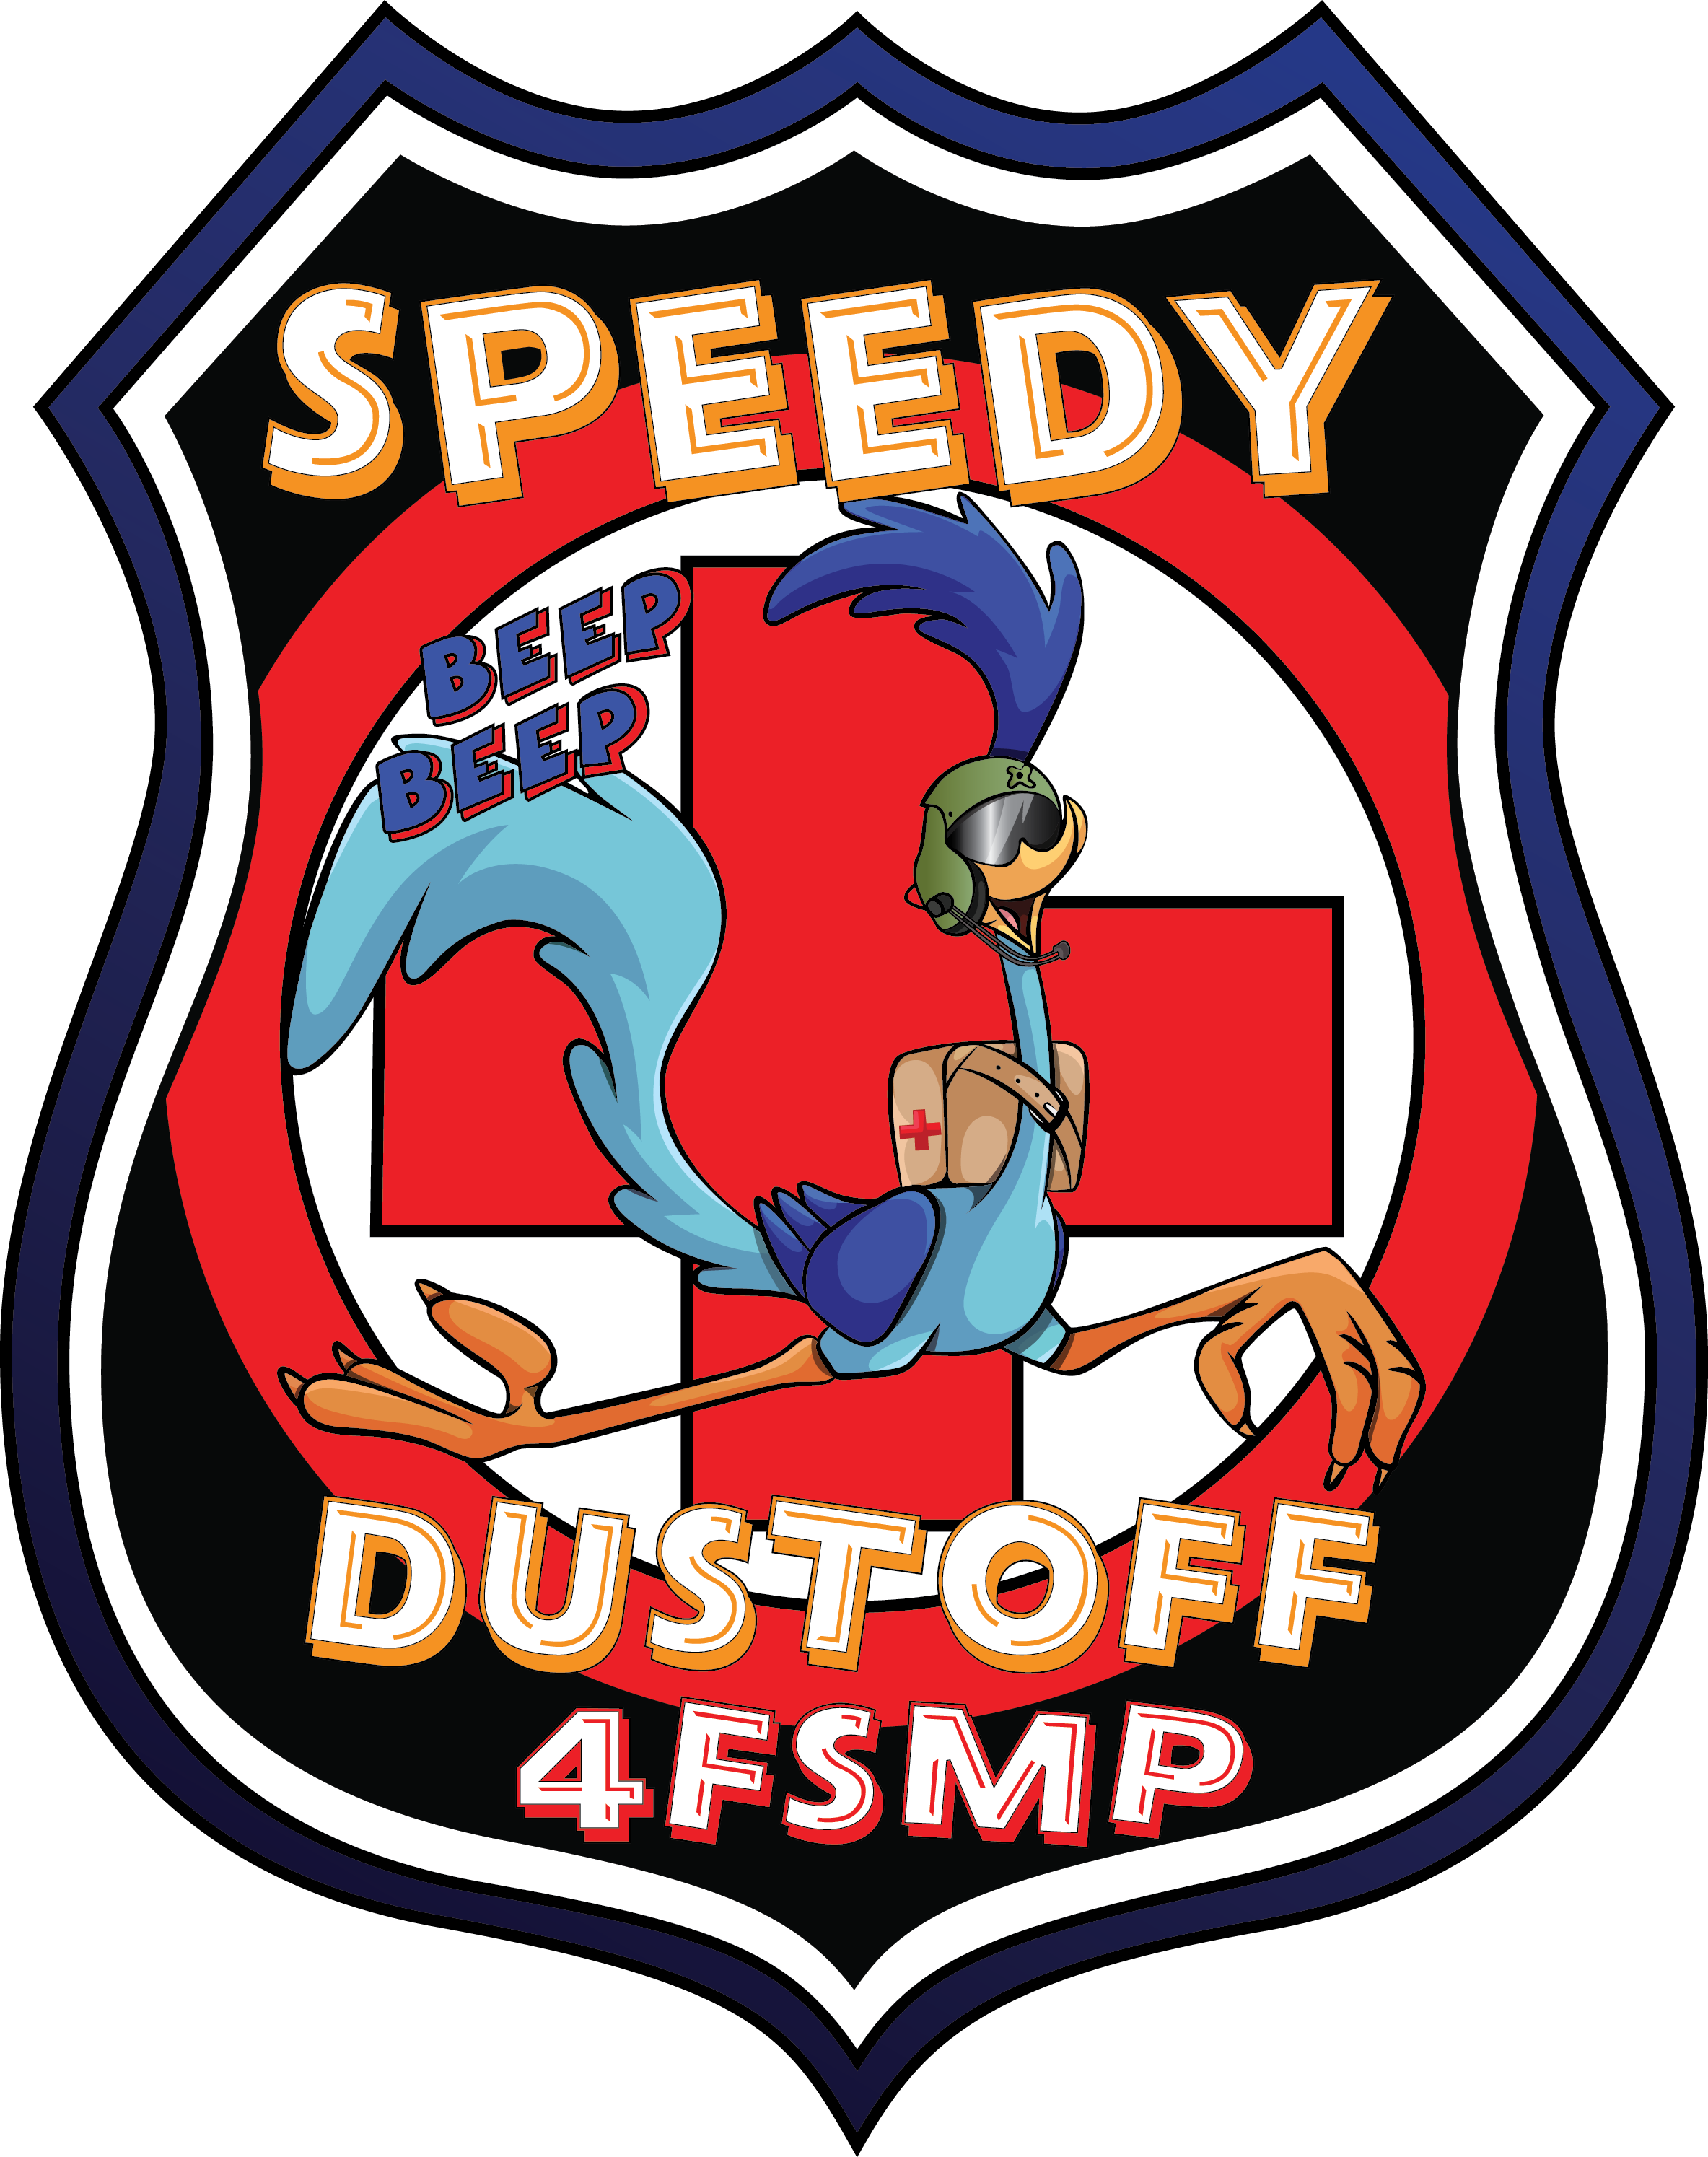 4 FSMP "Speedy" DUSTOFF